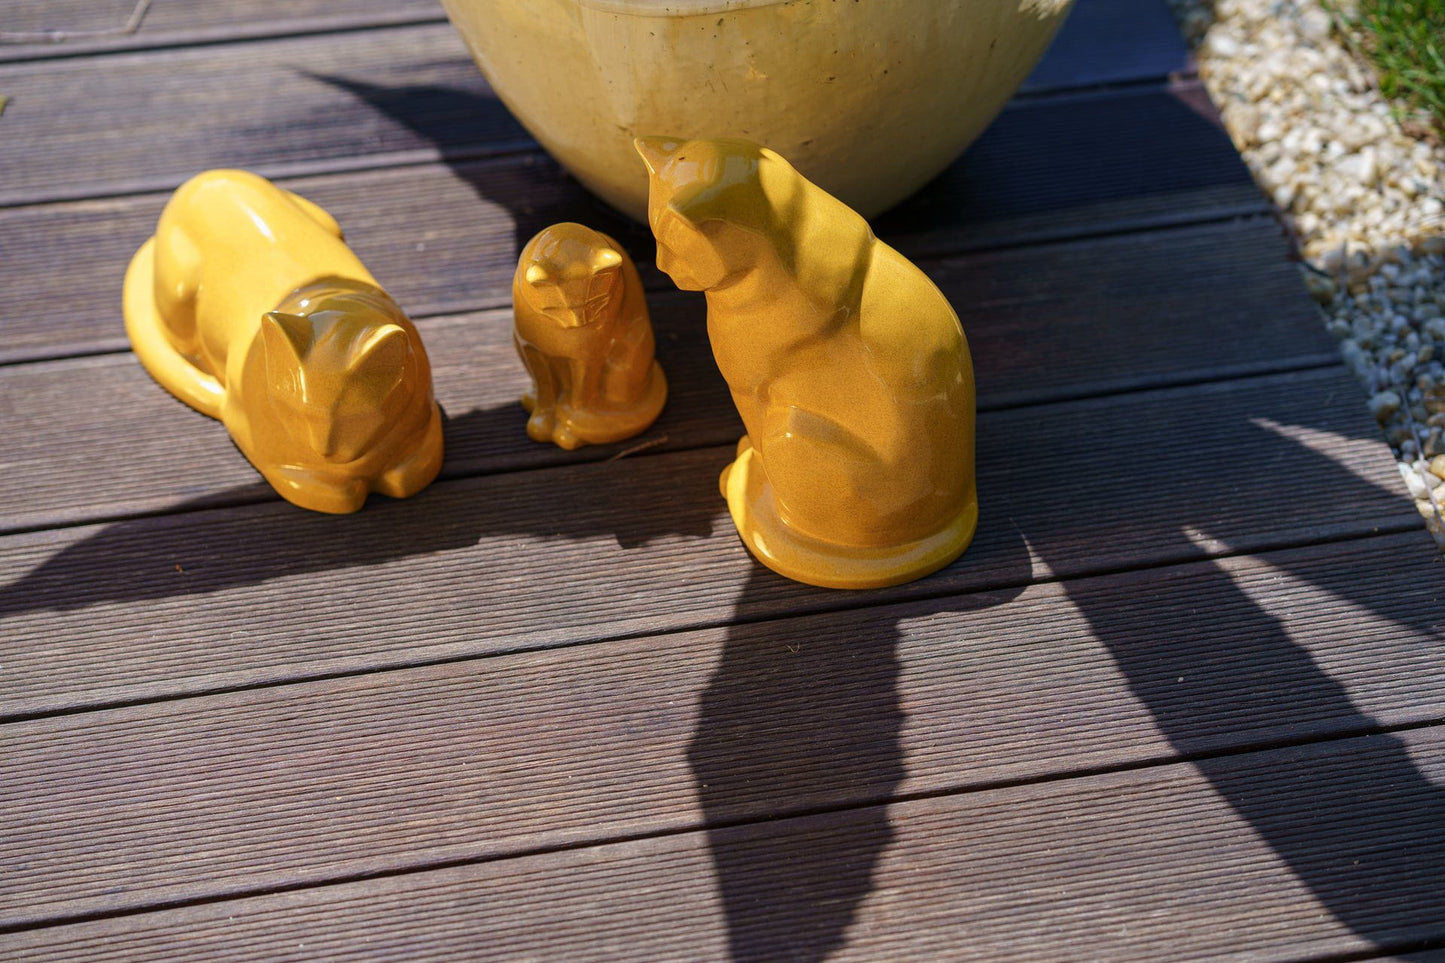 
                  
                    Pulvis Art Urns Pet Urn Mini Pet Urn for Ashes Neko - Amber Yellow | Ceramic | Handmade
                  
                